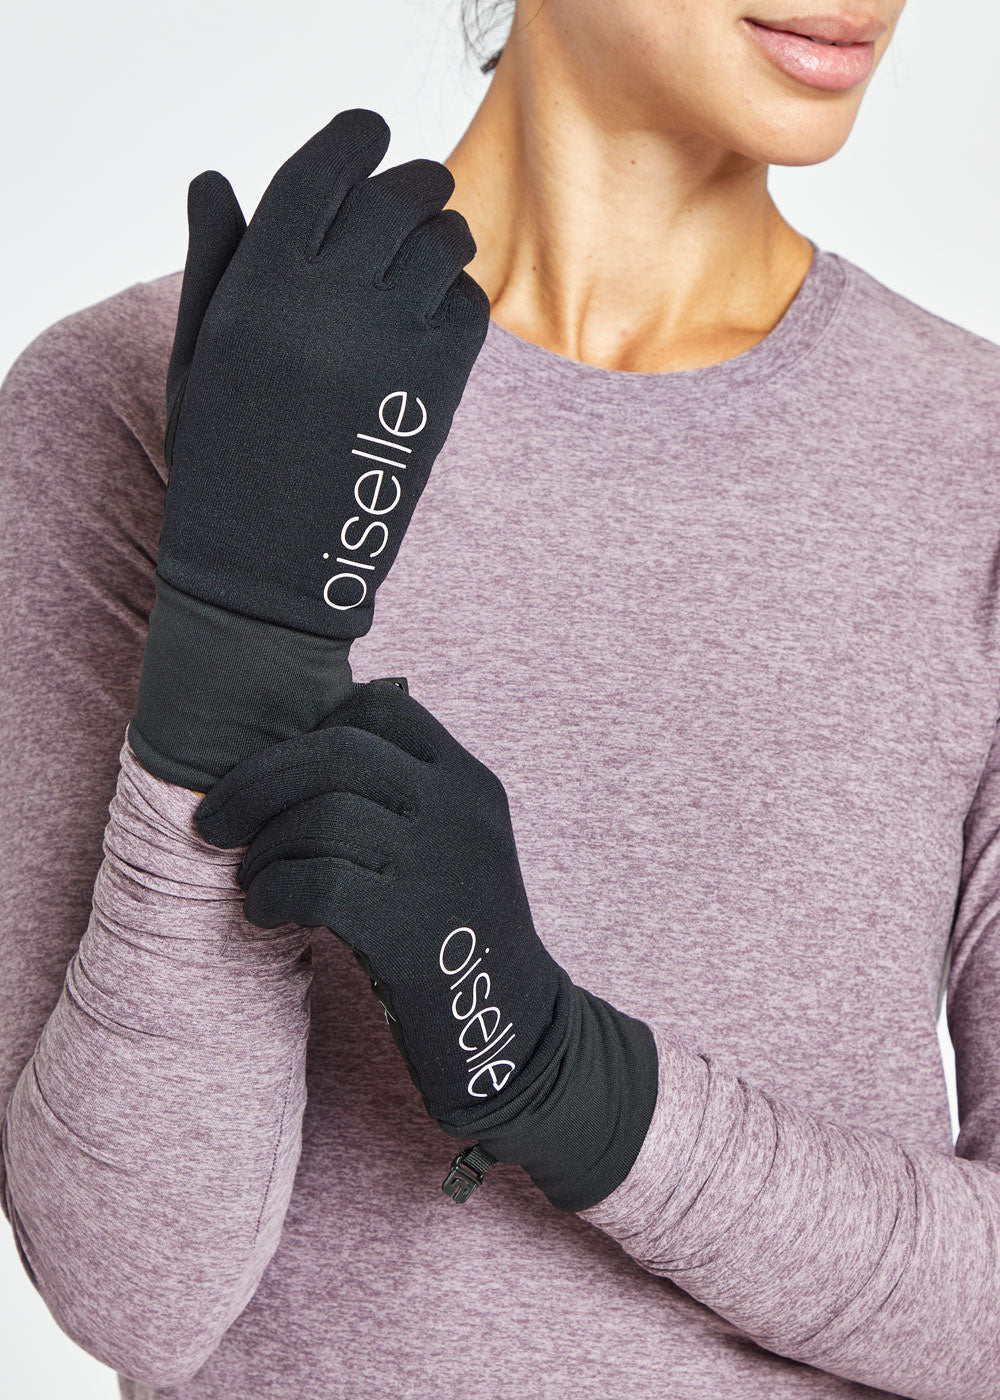 Move OISELLE Power – Gloves